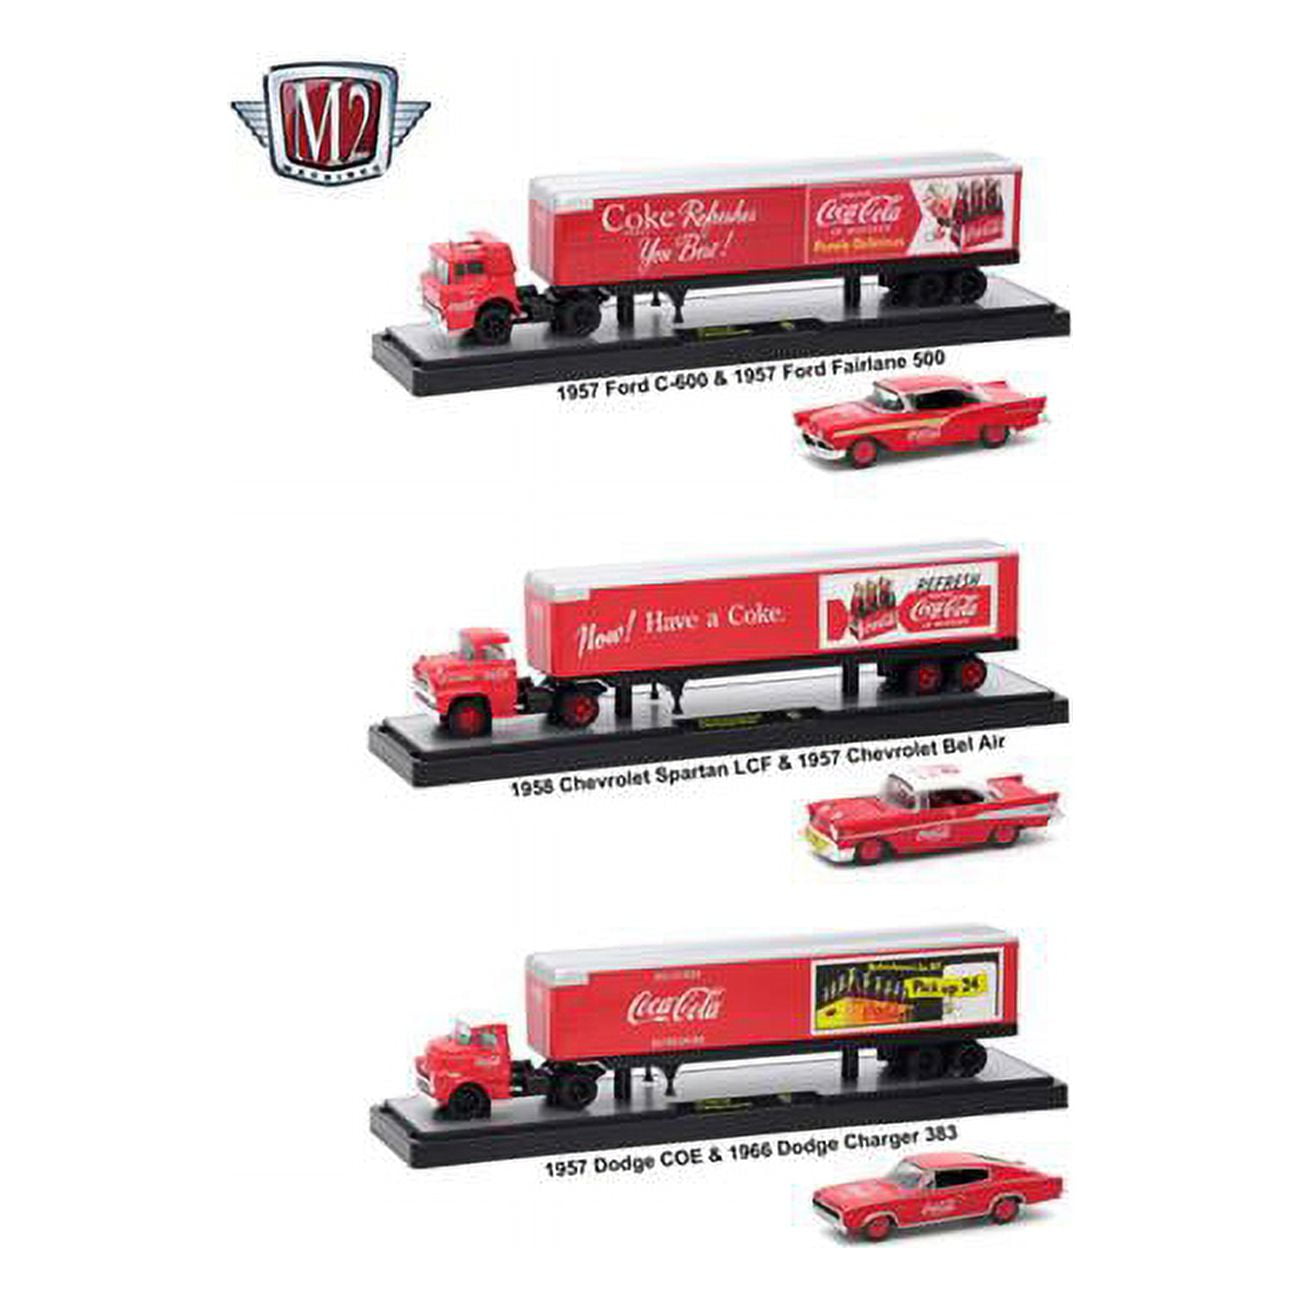 1-64 Auto Haulers Coca-cola Release, 3 Diecast Model Trucks Set